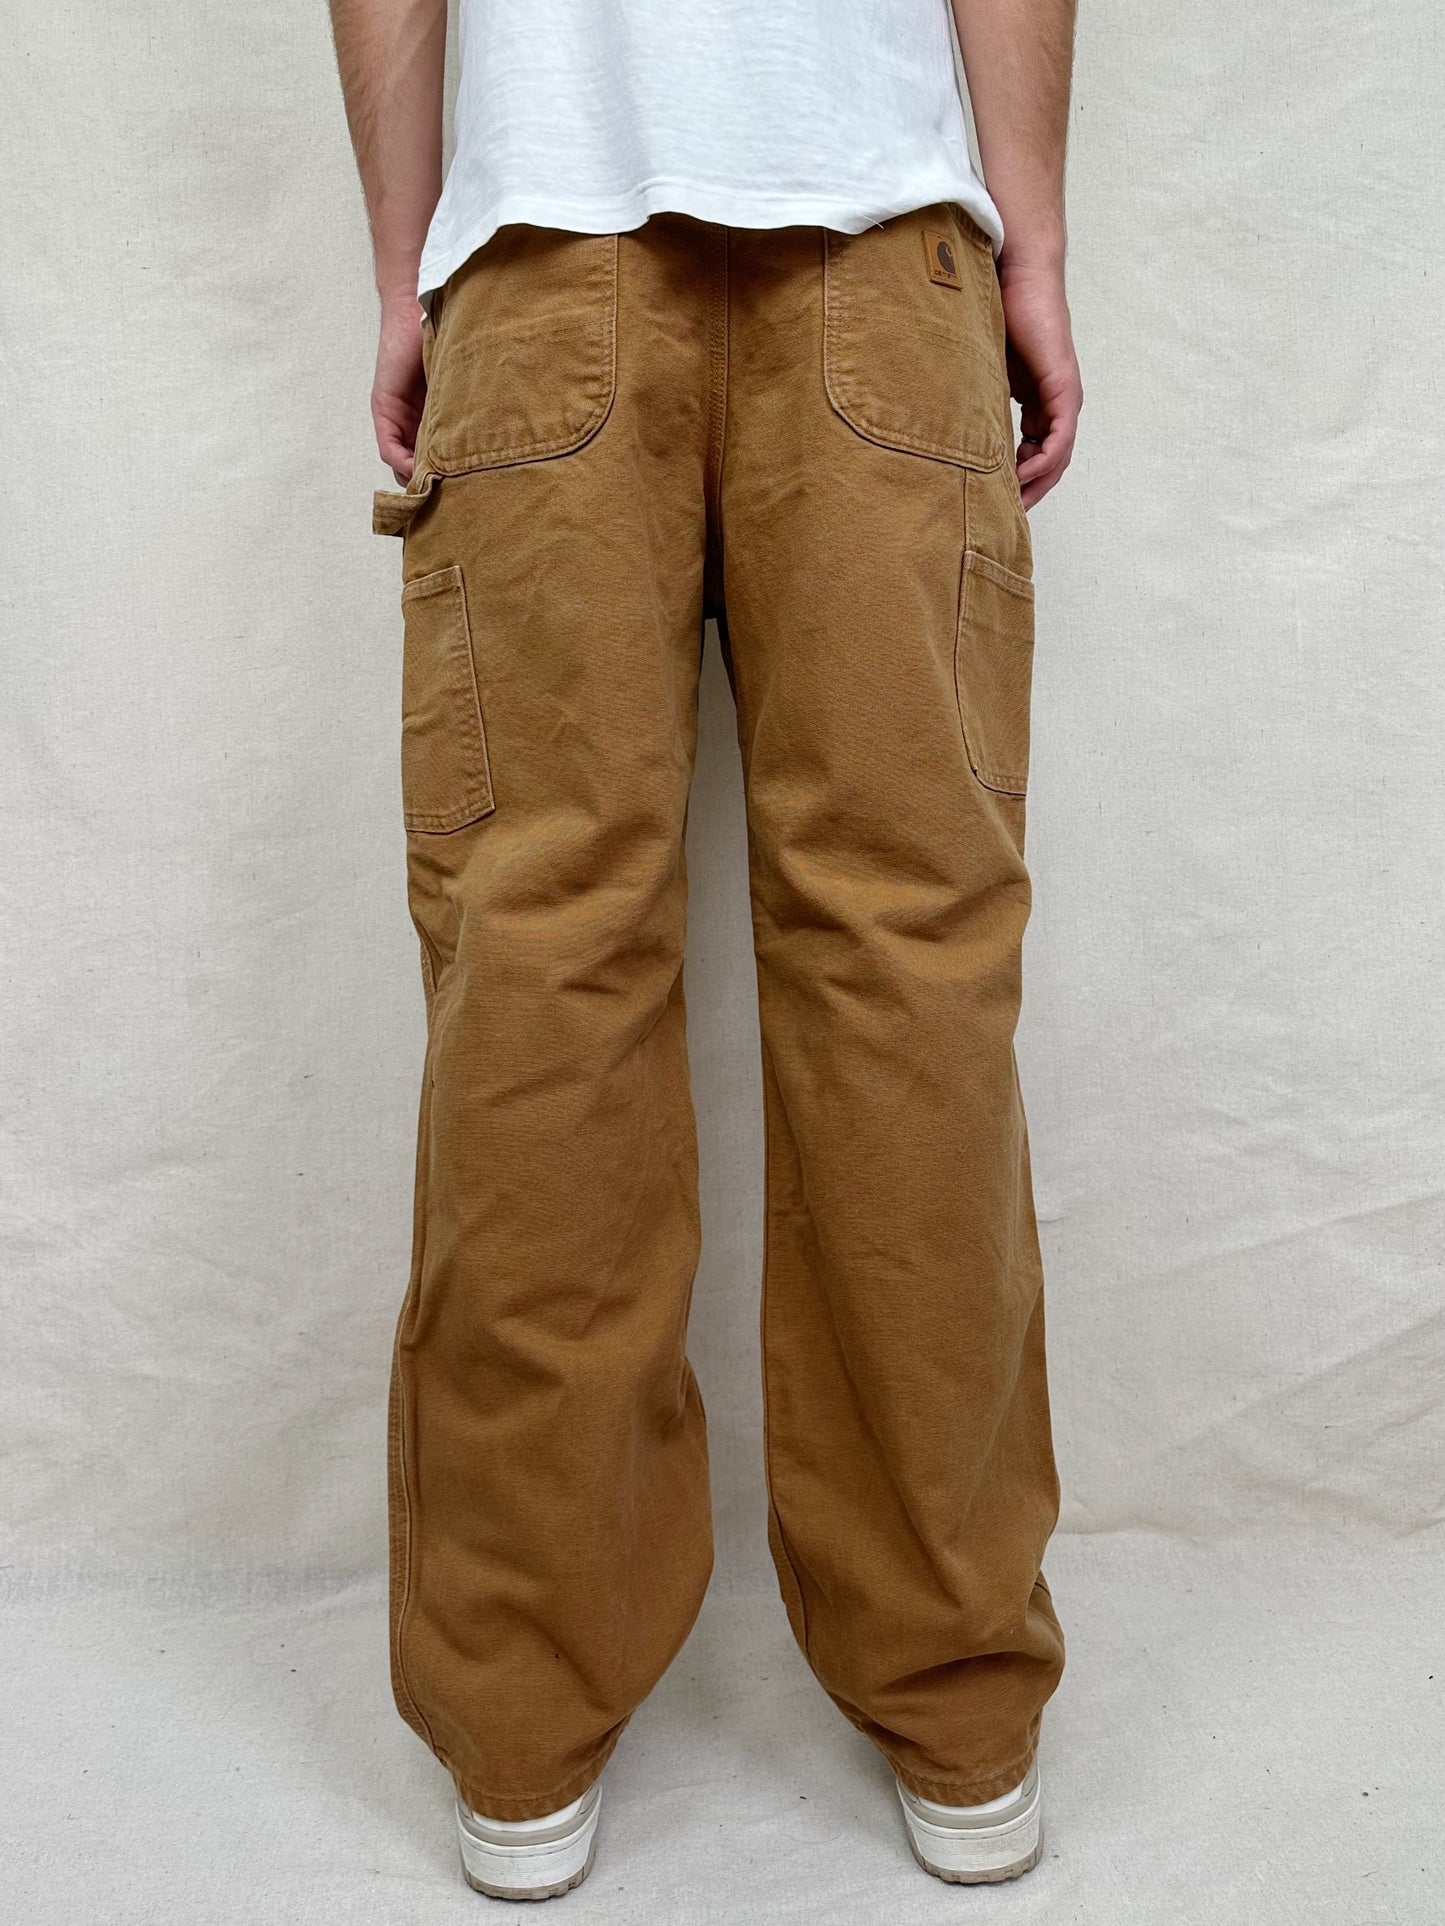 90's Carhartt Vintage Carpenter Jeans Size 32x30